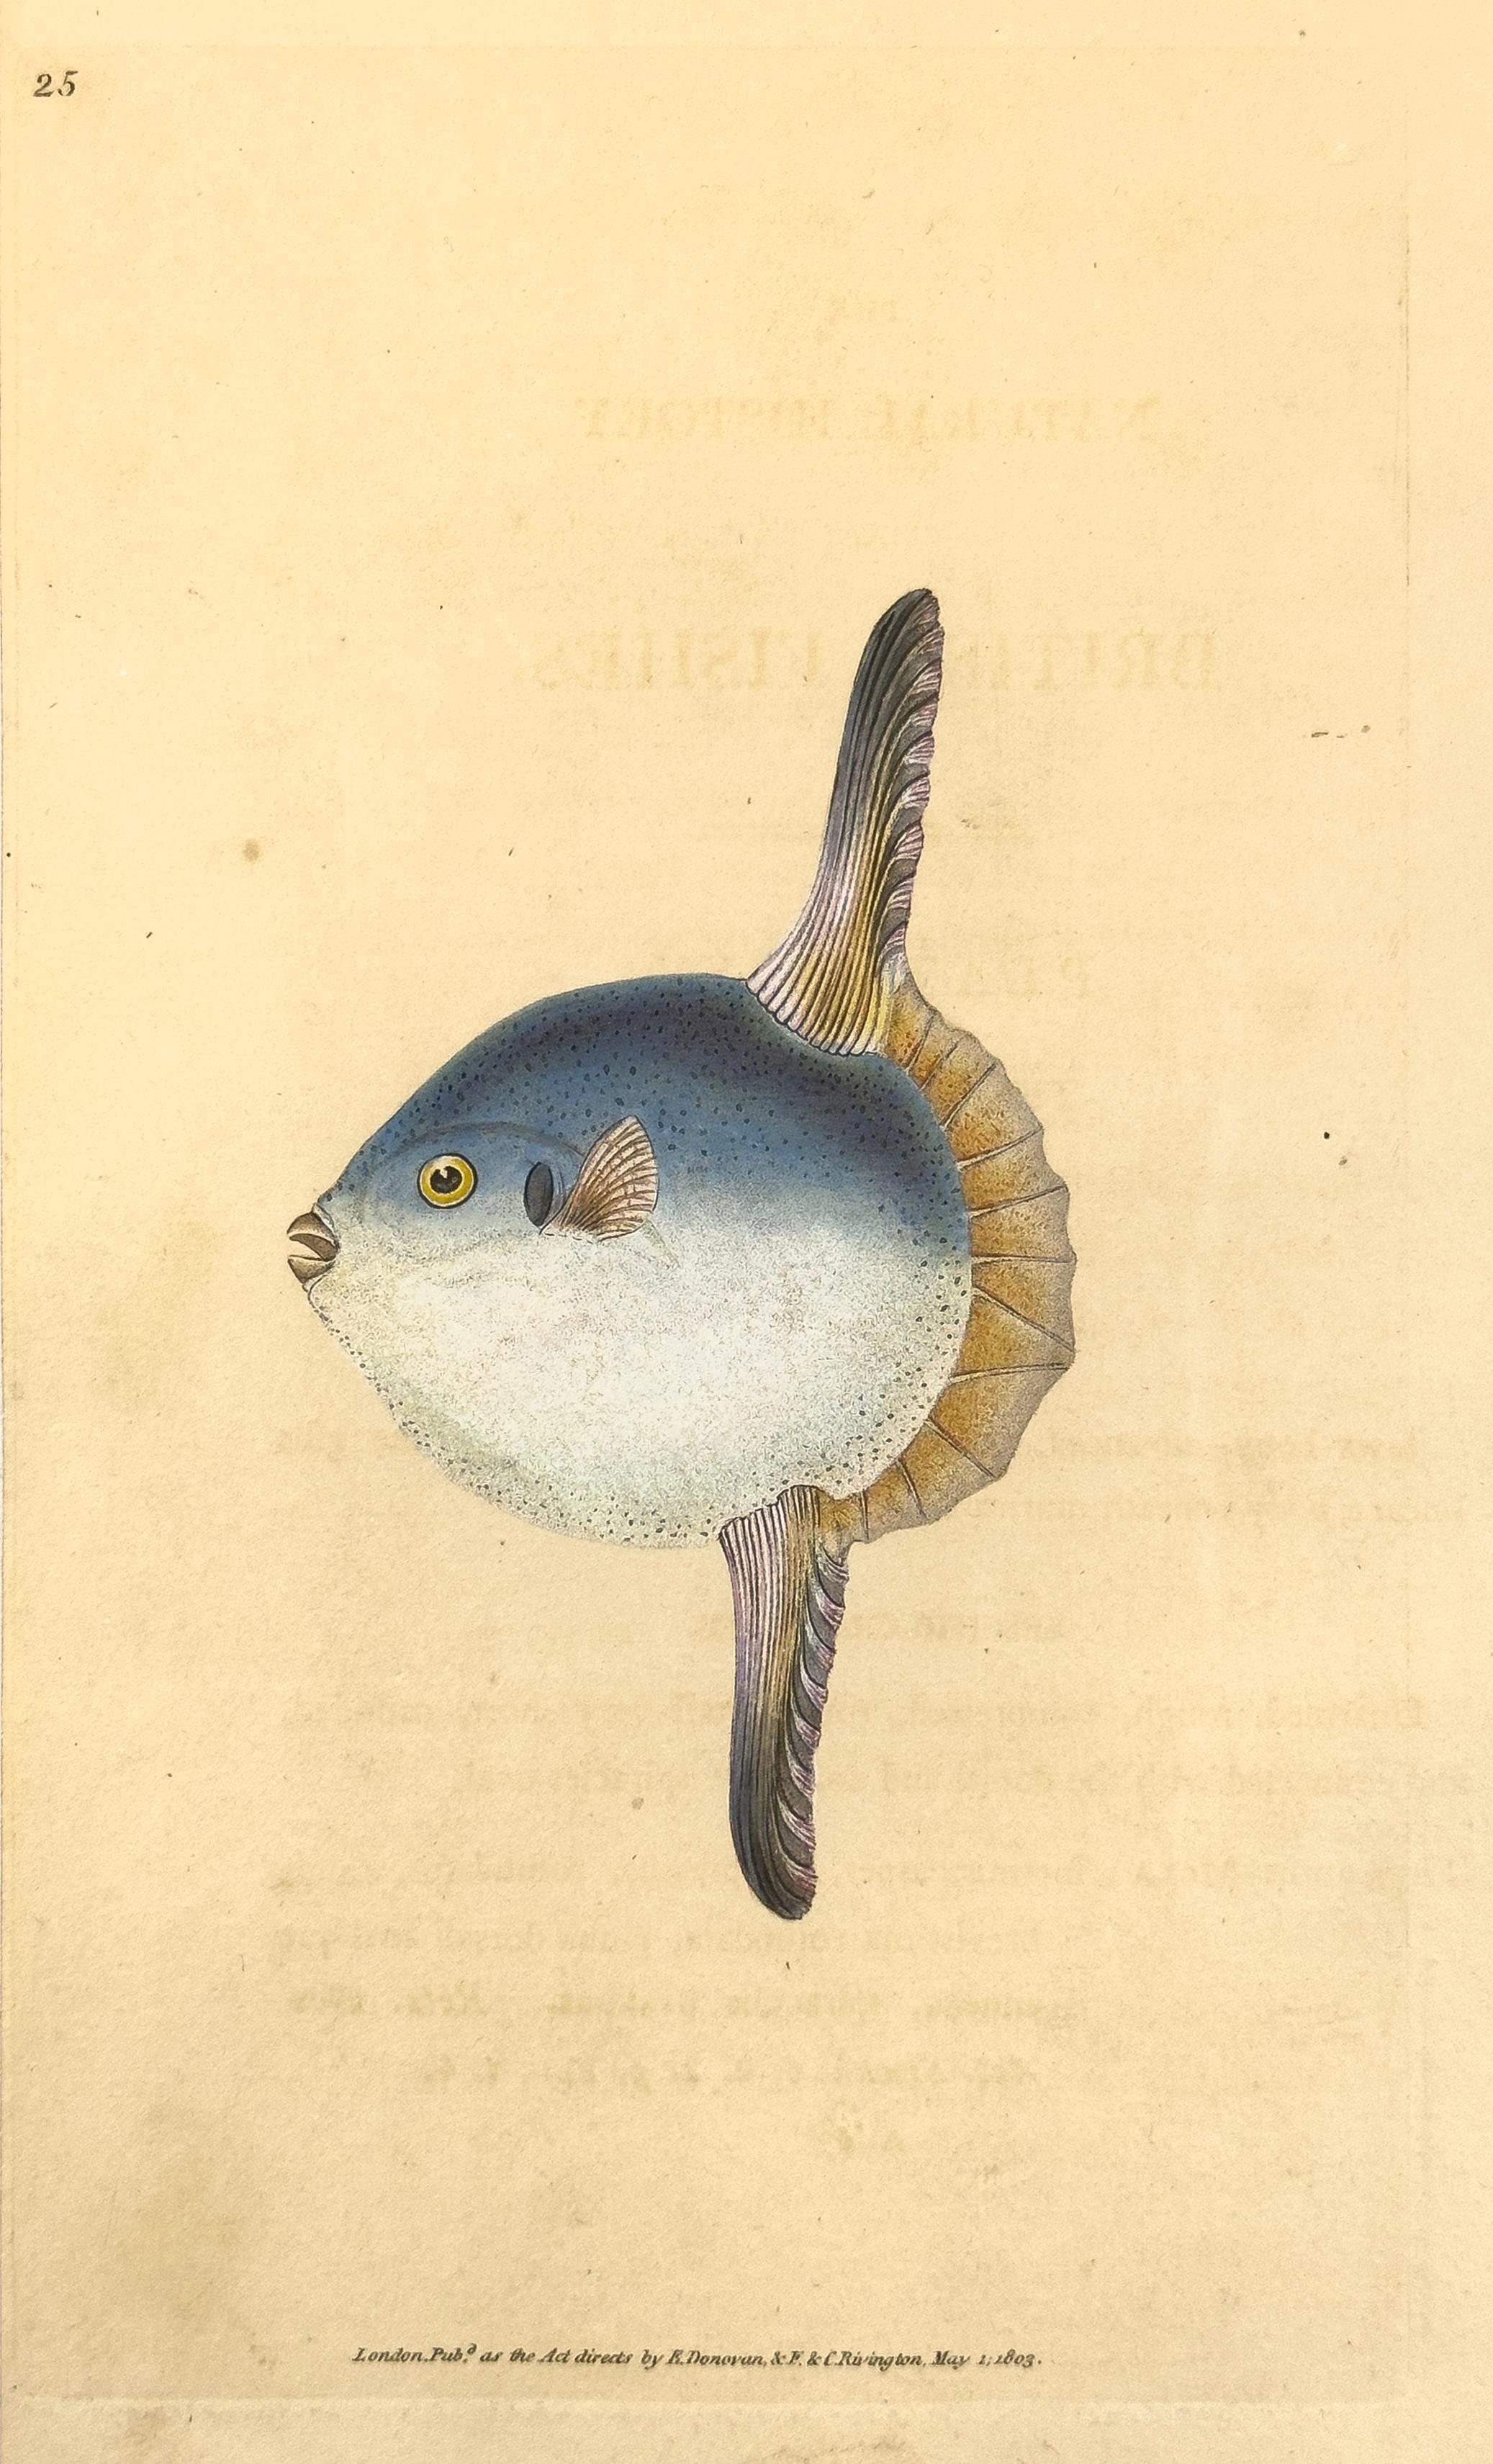 Edward Donovan Animal Print - 25: Tetrodon mola, Sun Fish